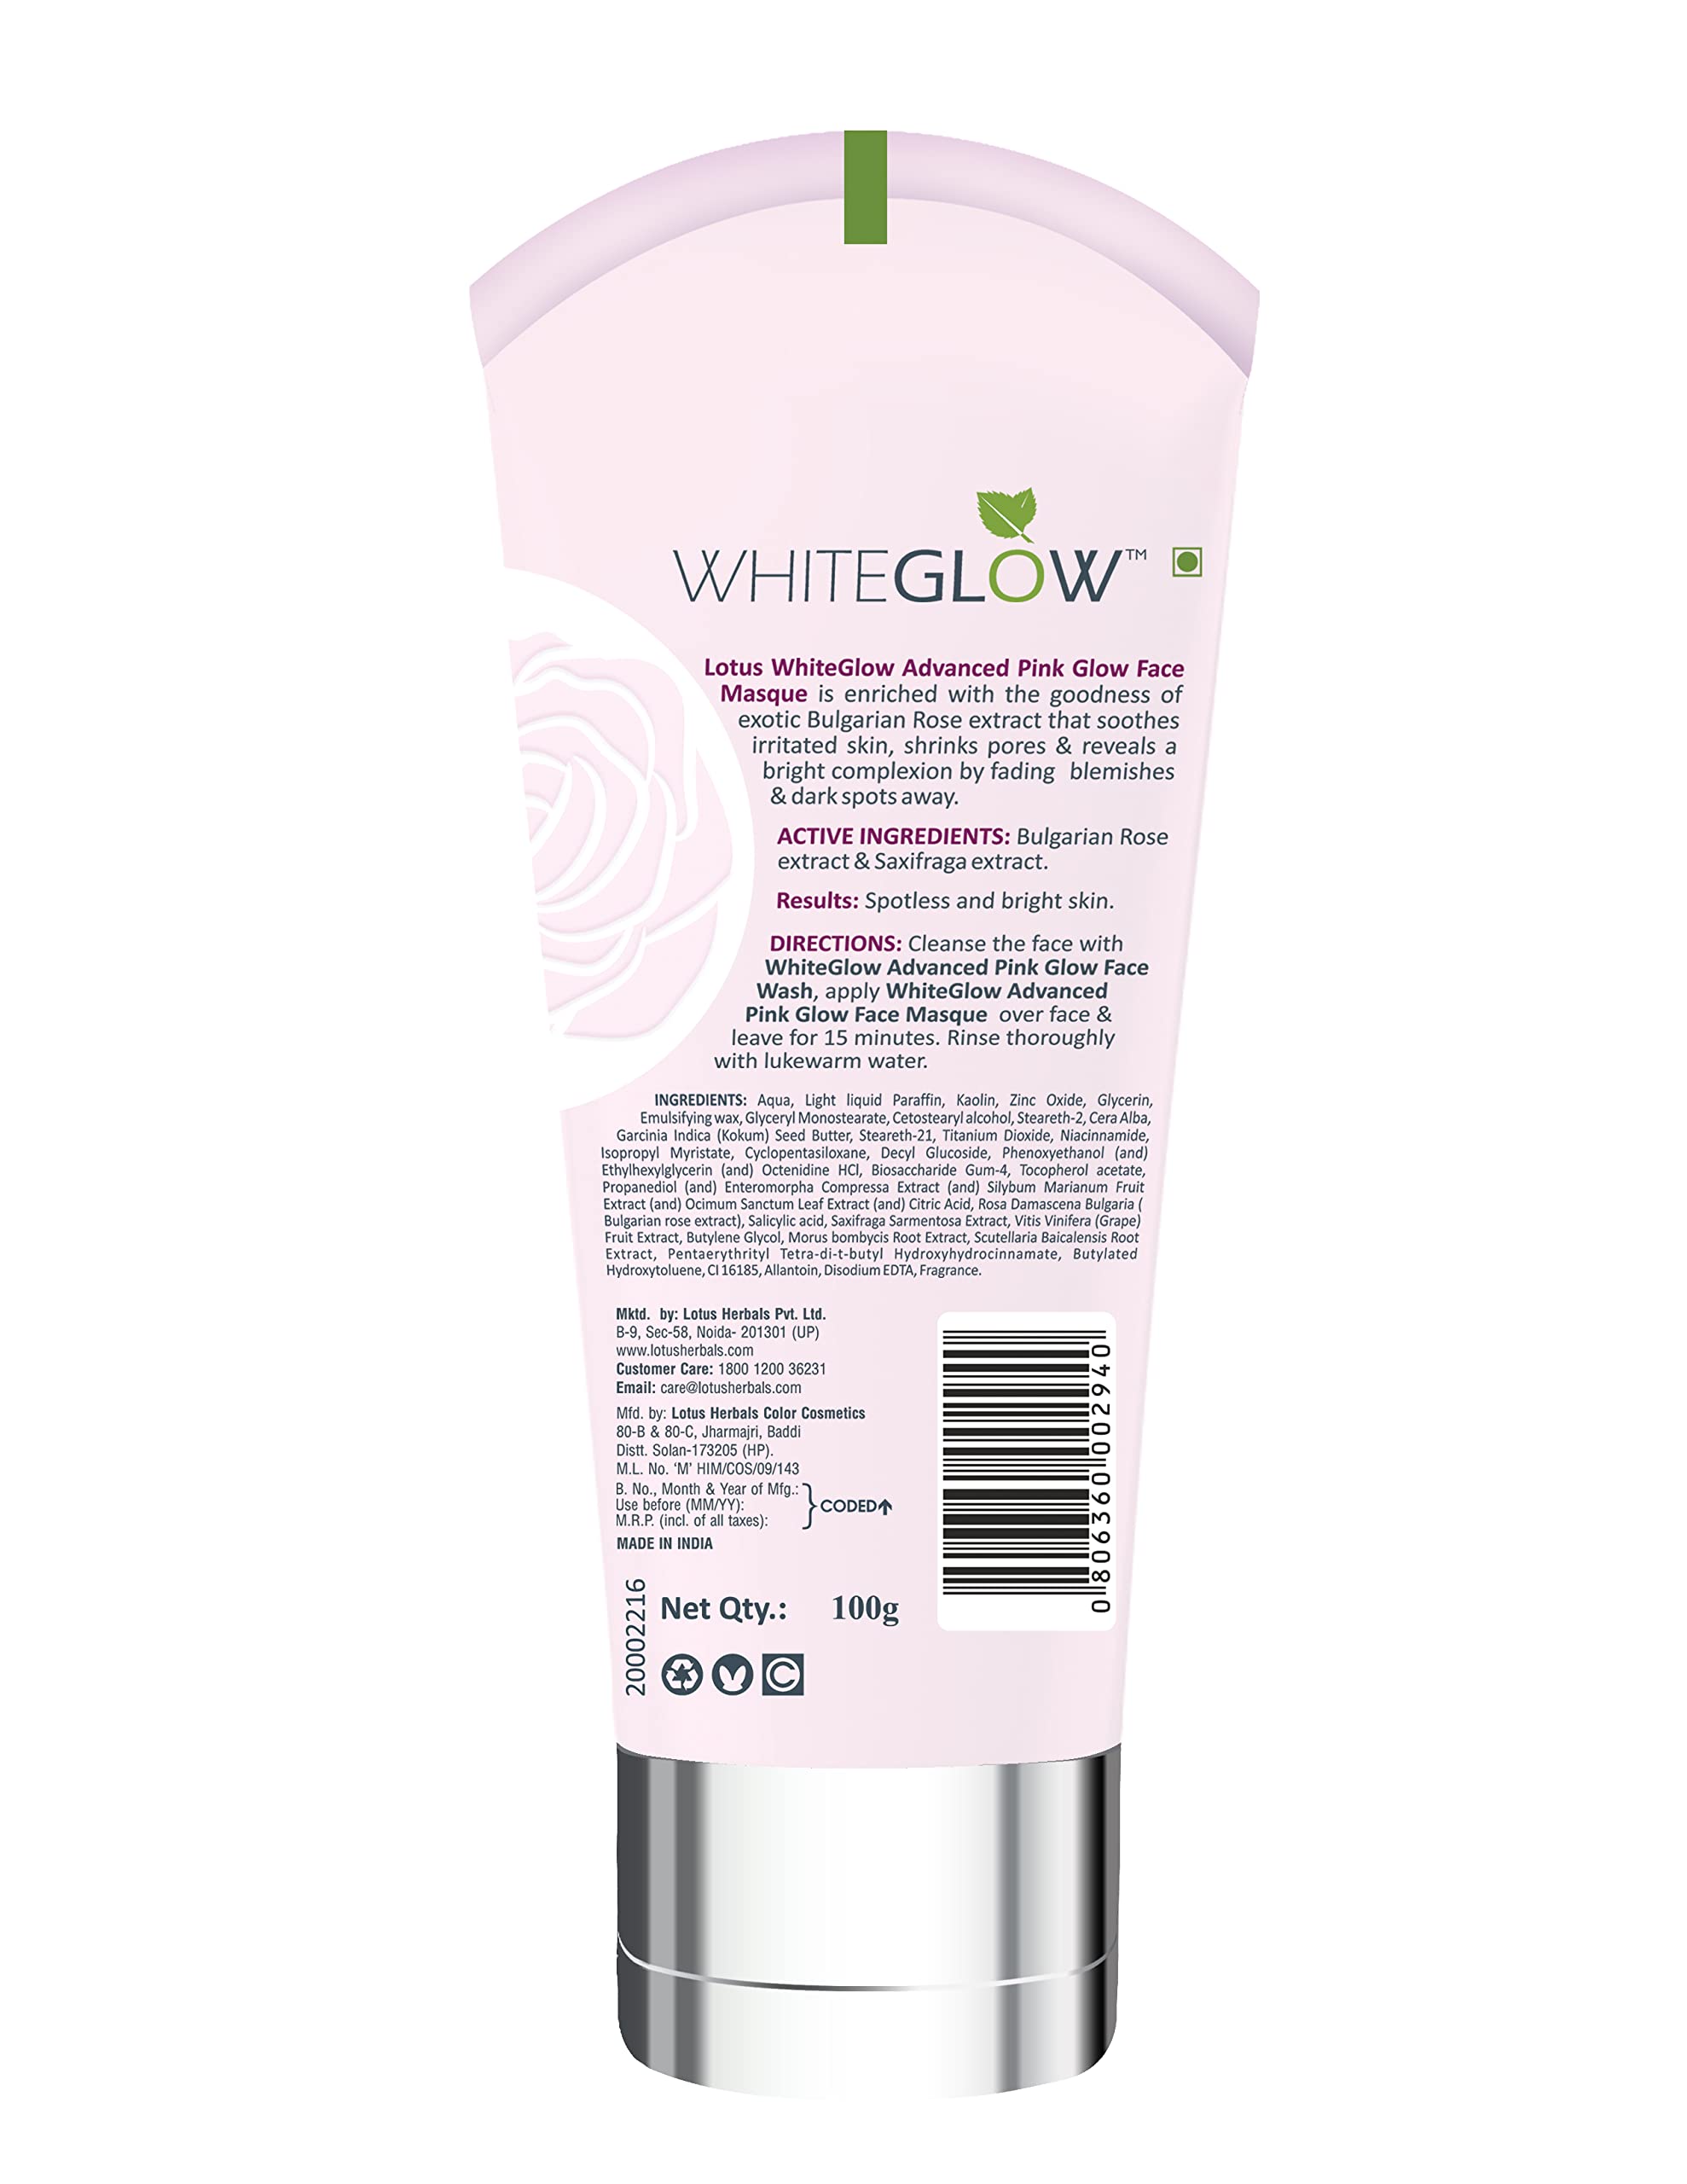 Lotus White Glow Face Masque 100g - Achieve Radiant Skin